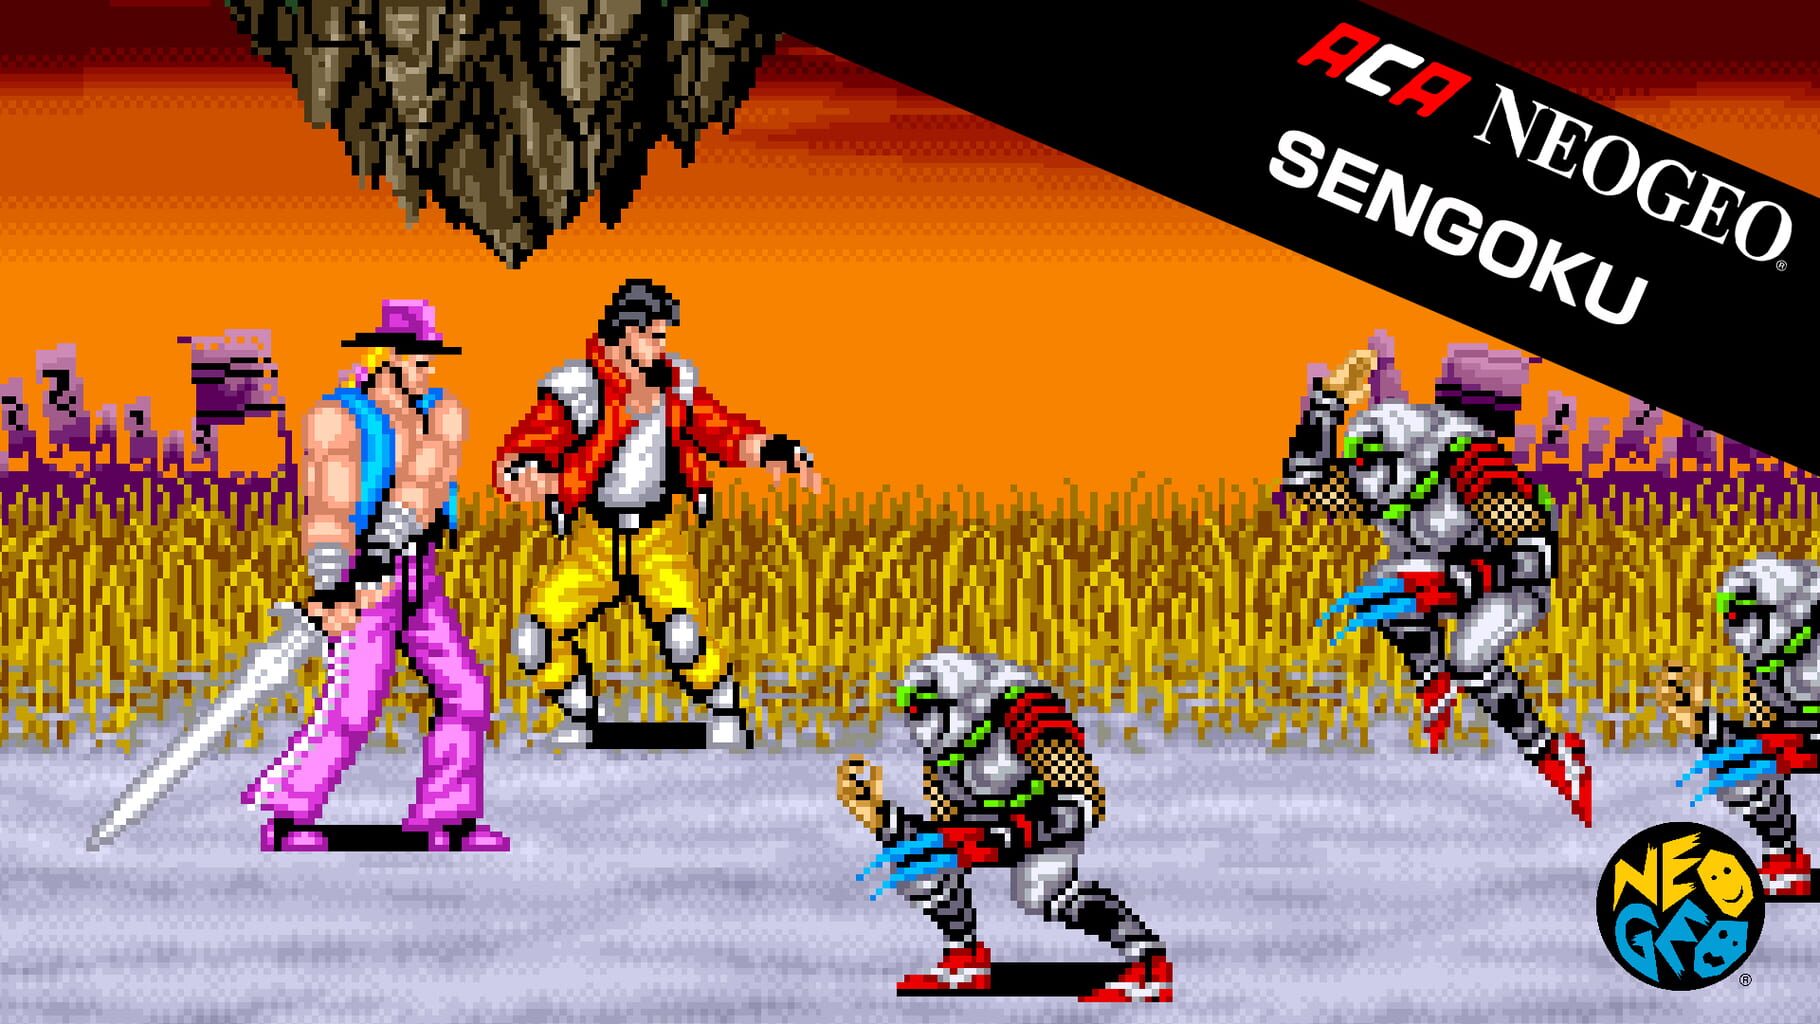 ACA Neo Geo: Sengoku artwork